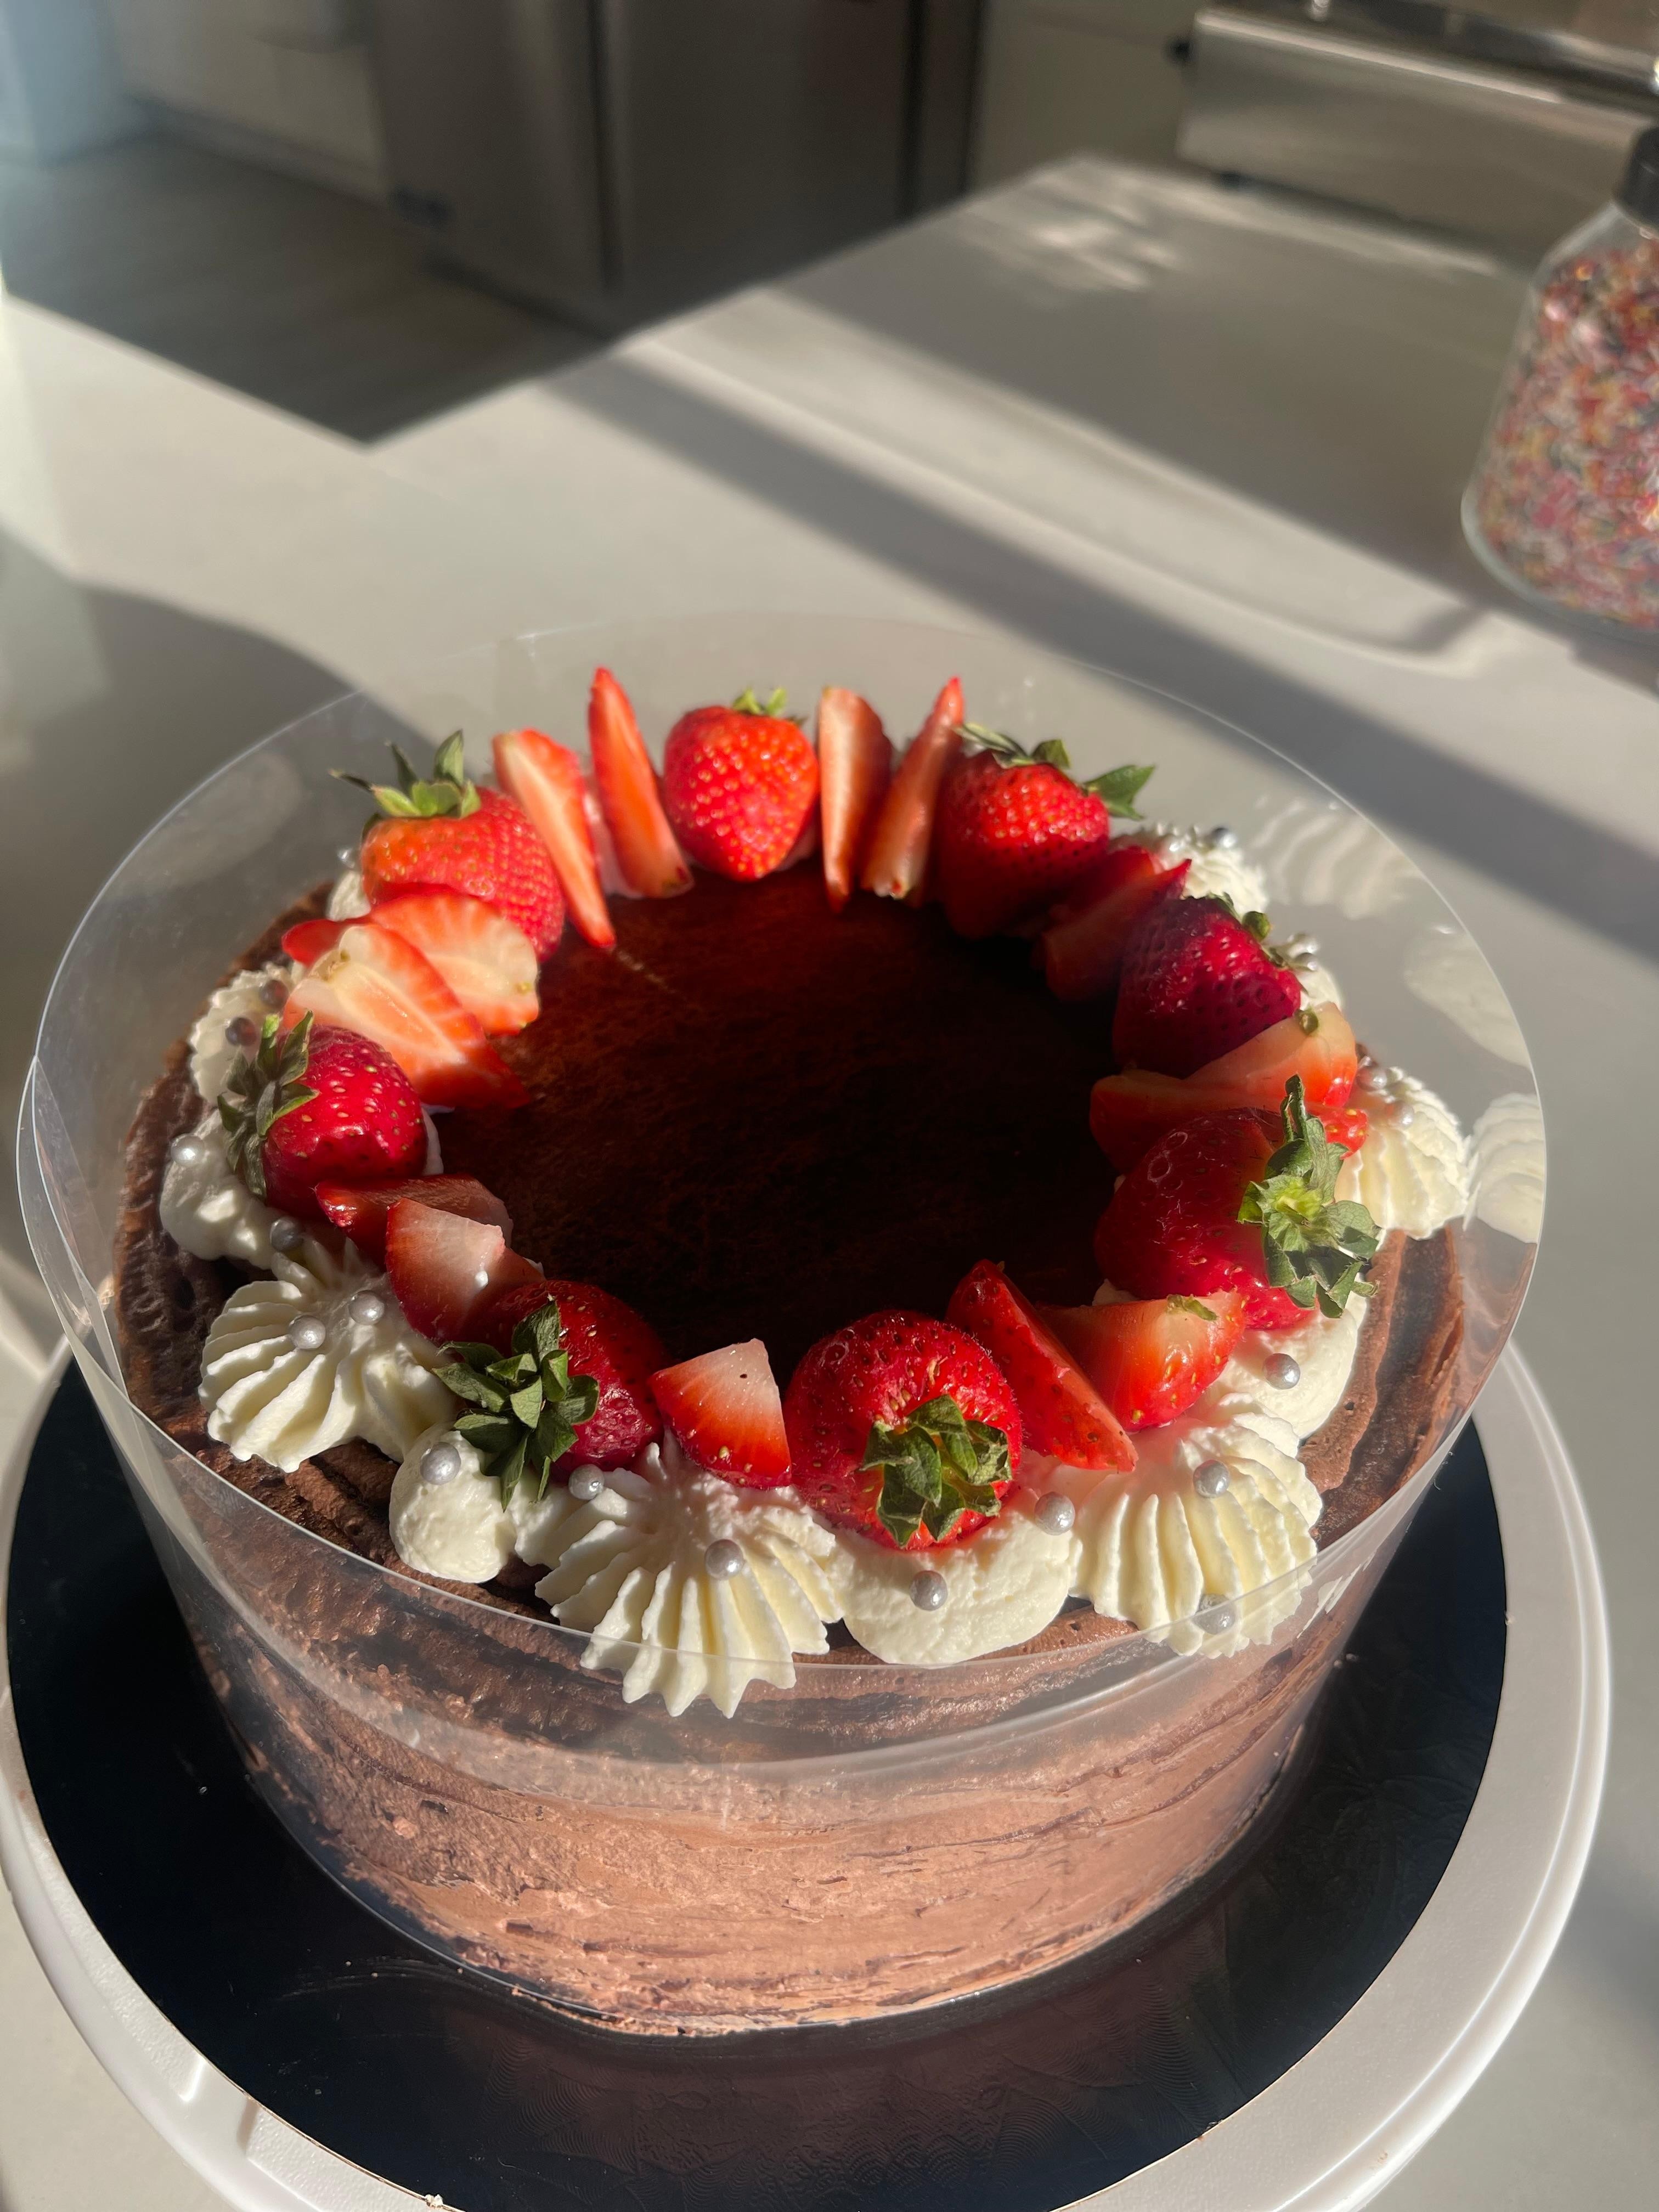 Chocolate crepe cake “8